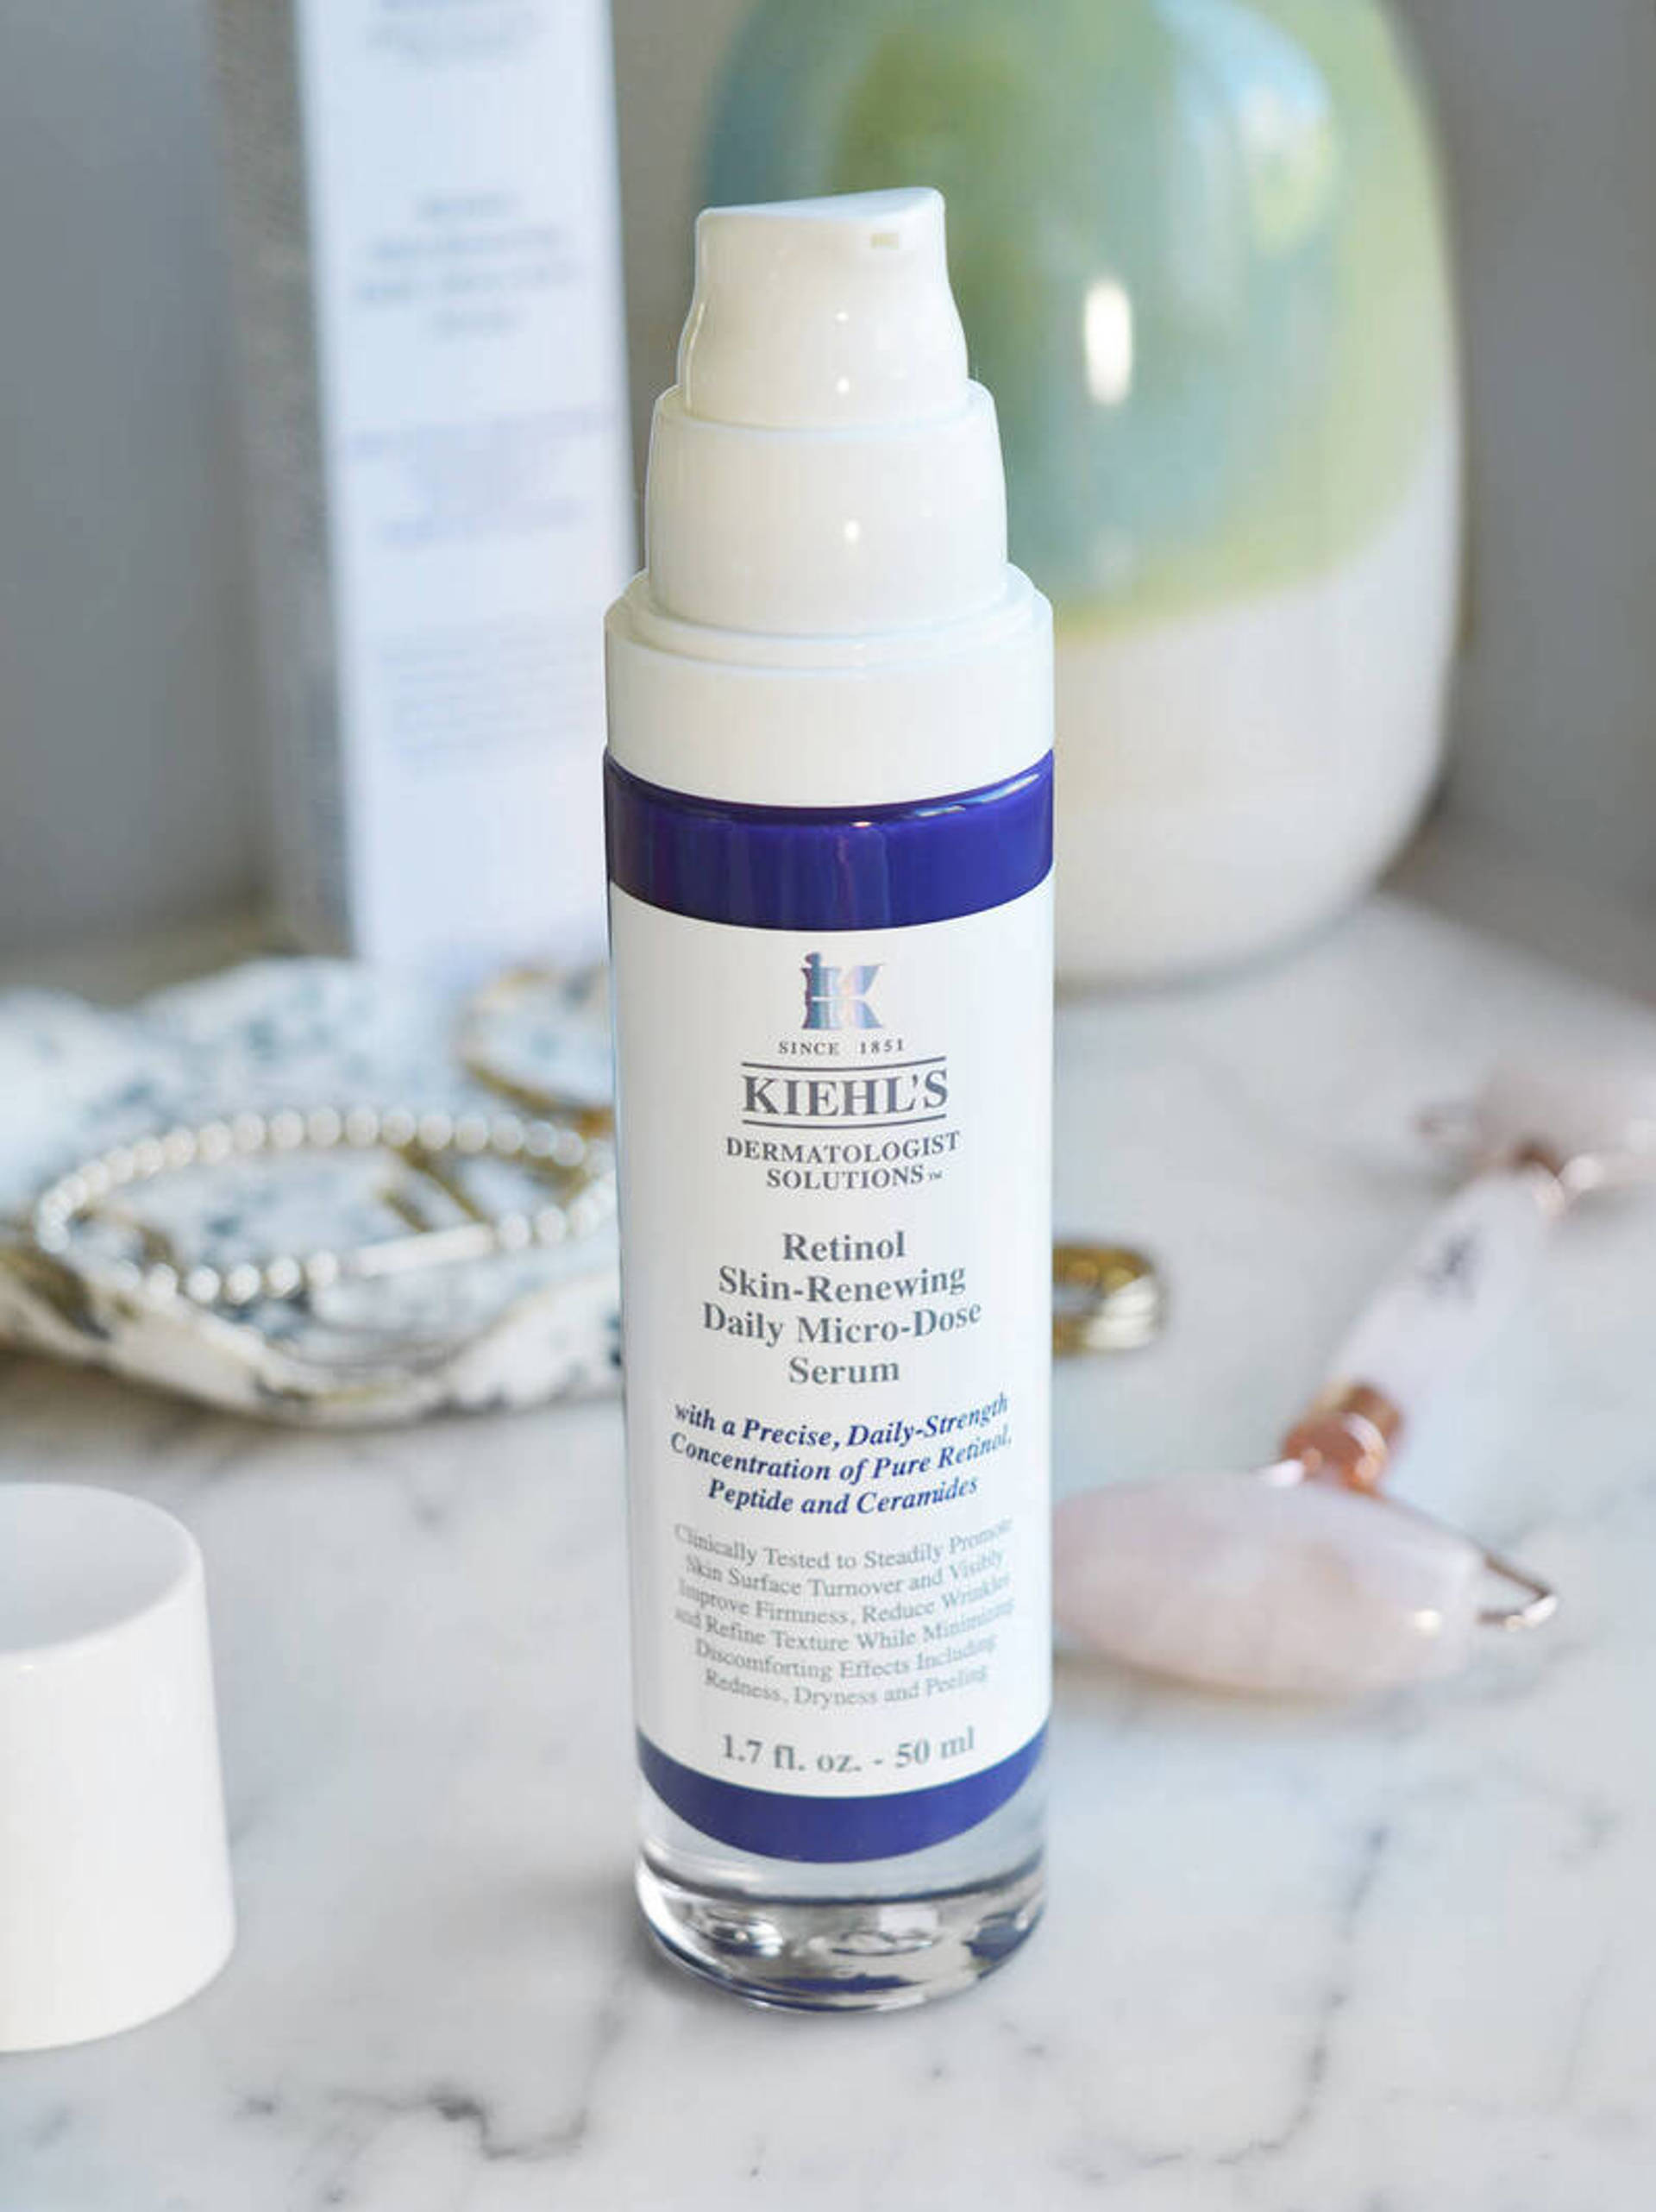 2. Kiehl's Retinol Skin-Renewing Daily Micro-Dose Serum